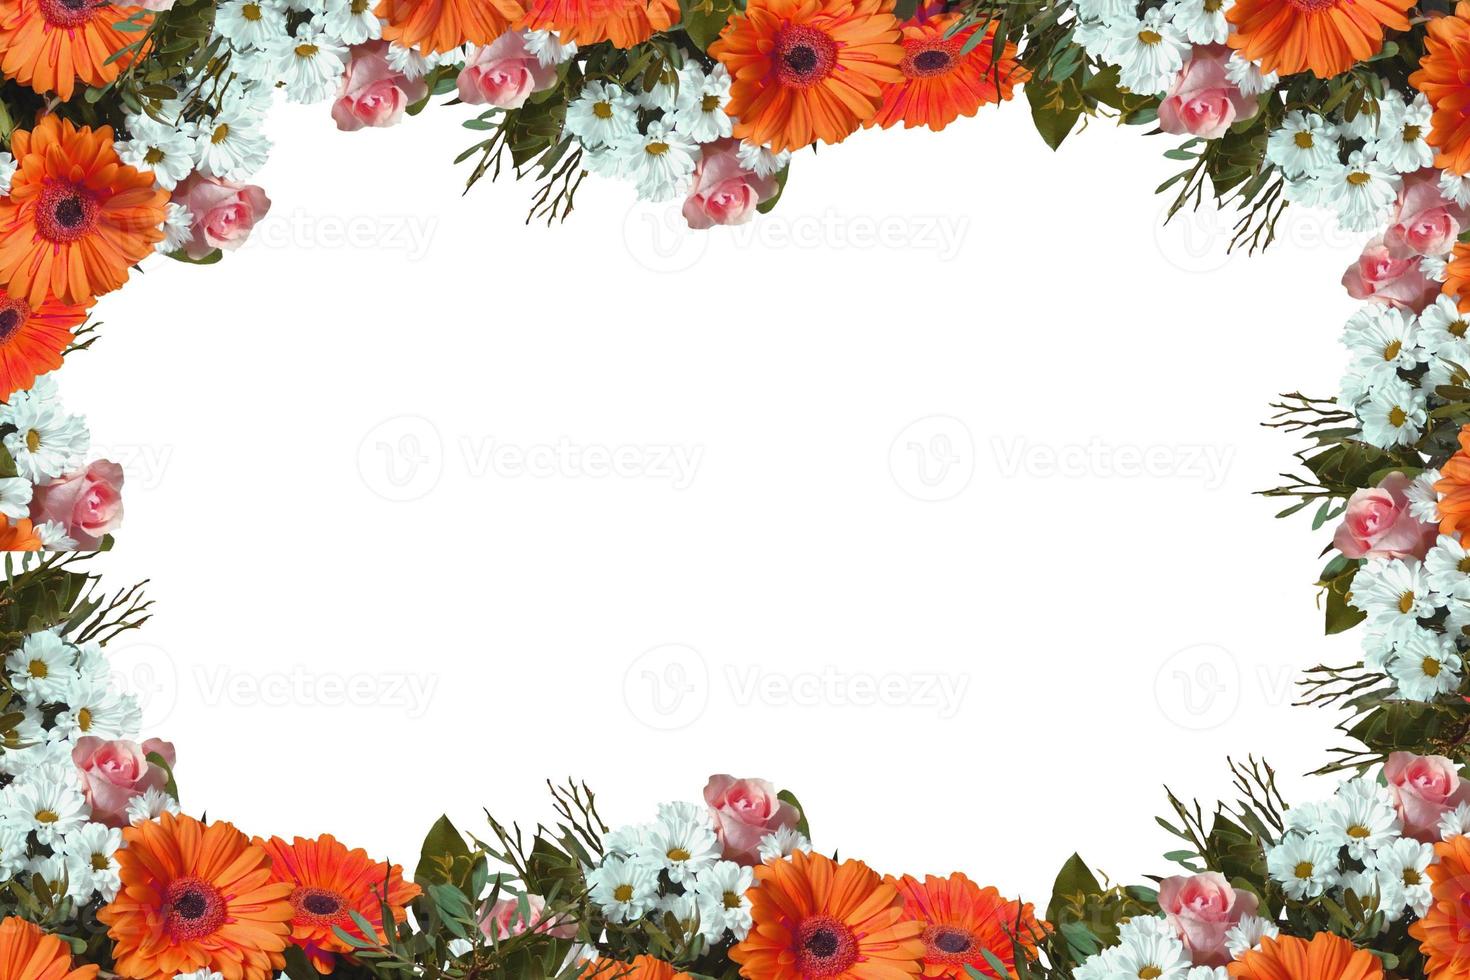 bloem grens kader achtergrond, bloem achtergrond, bloemen kader achtergrond. foto